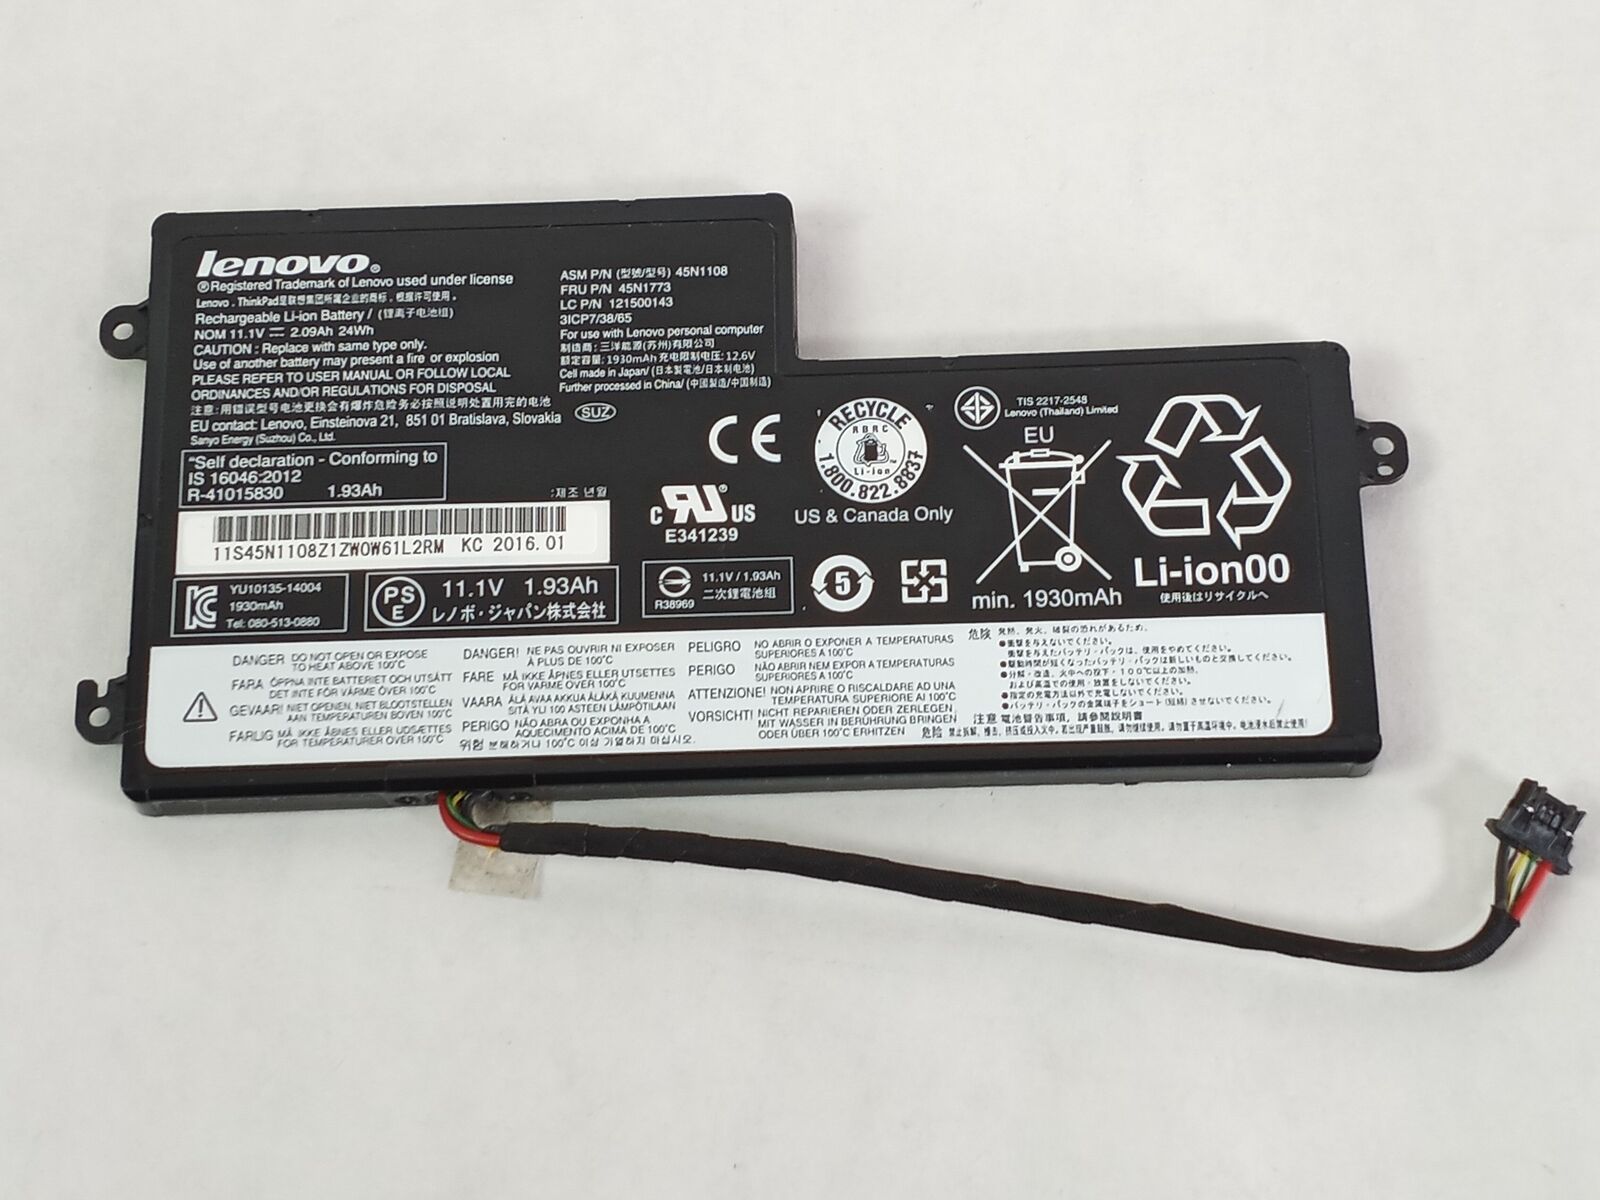 Lot of 10 Lenovo 45N1773 3 Cell 2090mAh Laptop Battery for ThinkPad X270 / T460